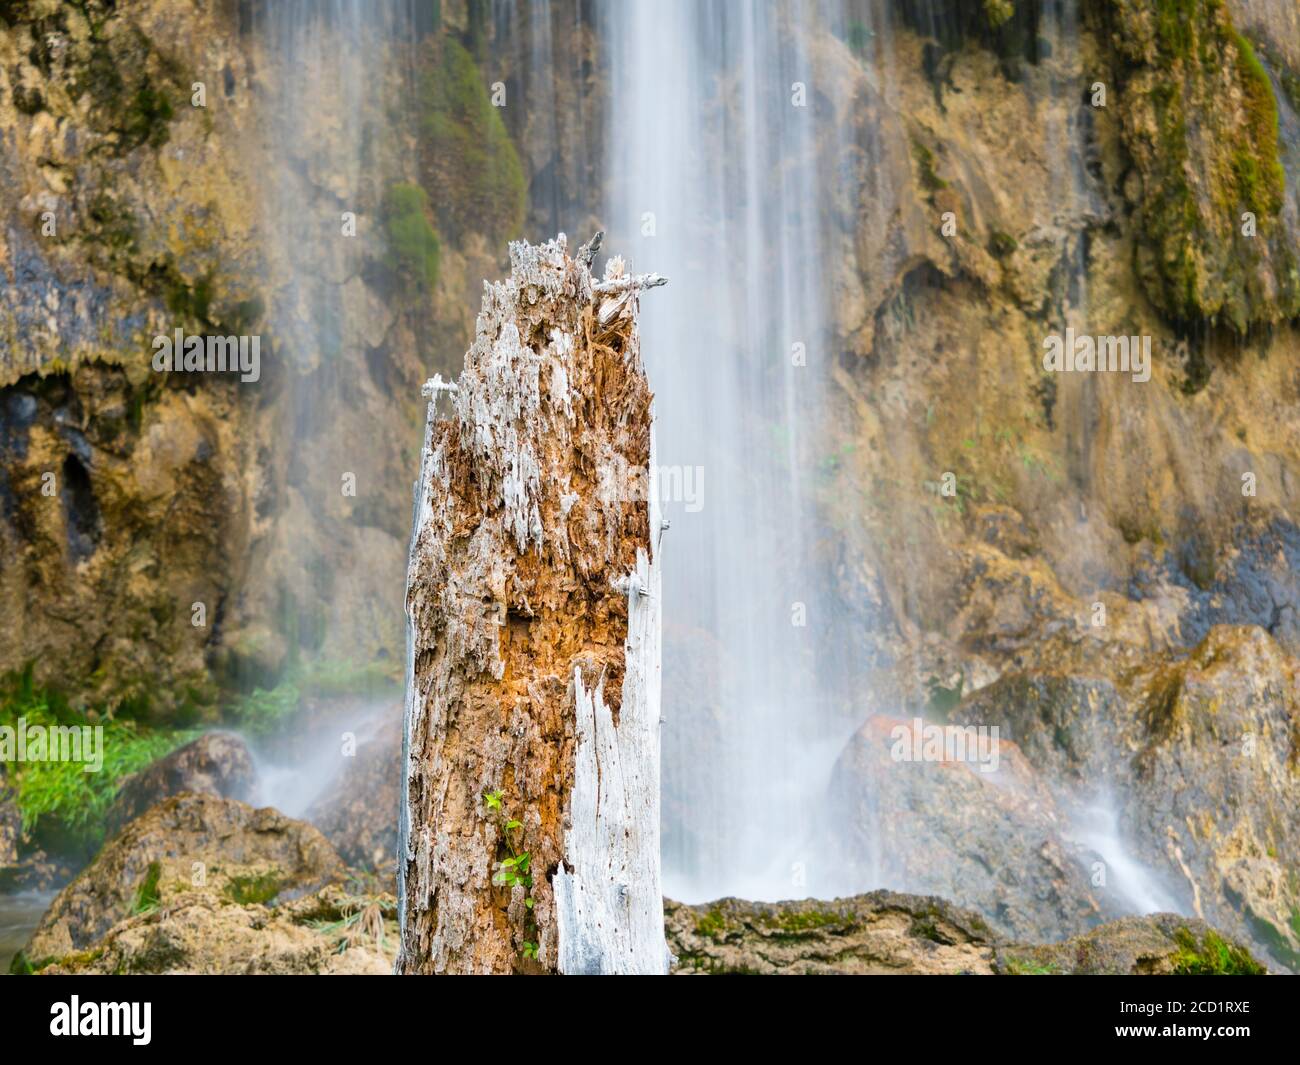 Broken damaged wooden tree trunk Plitvice lakes in Croatia Europe water flowing waterflow waterfall Stock Photo